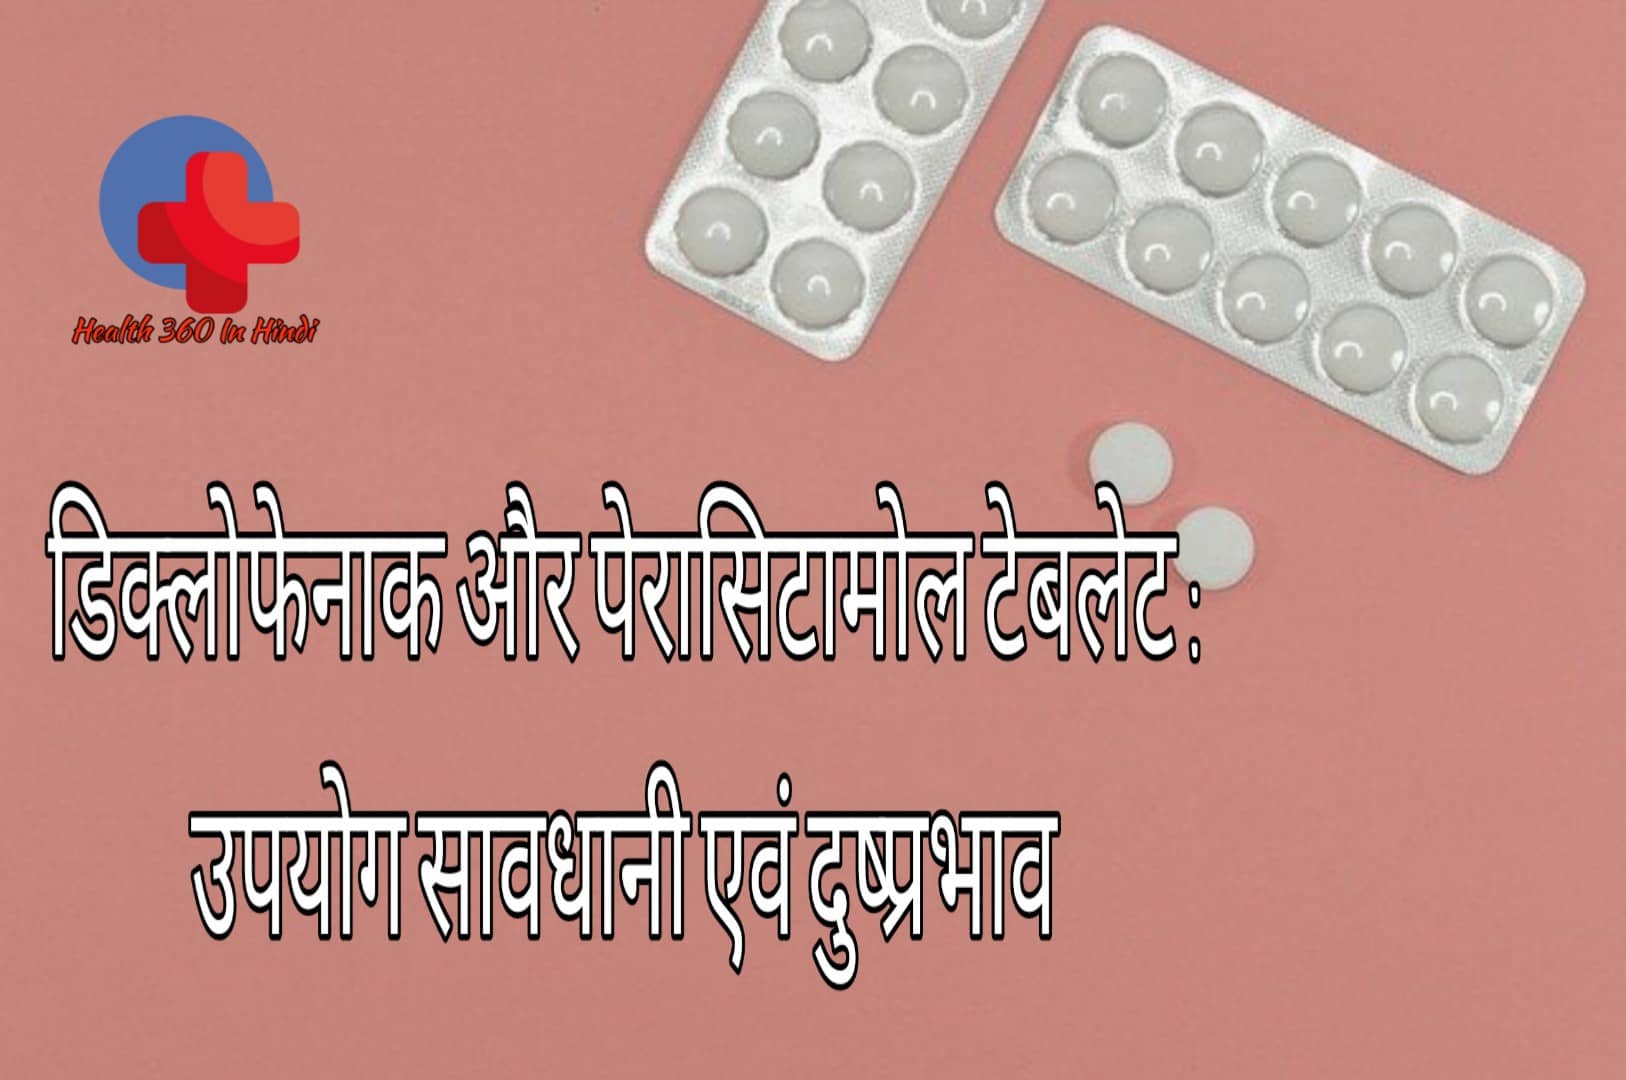 Diclofenac and Paracetamol tablets in Hindi